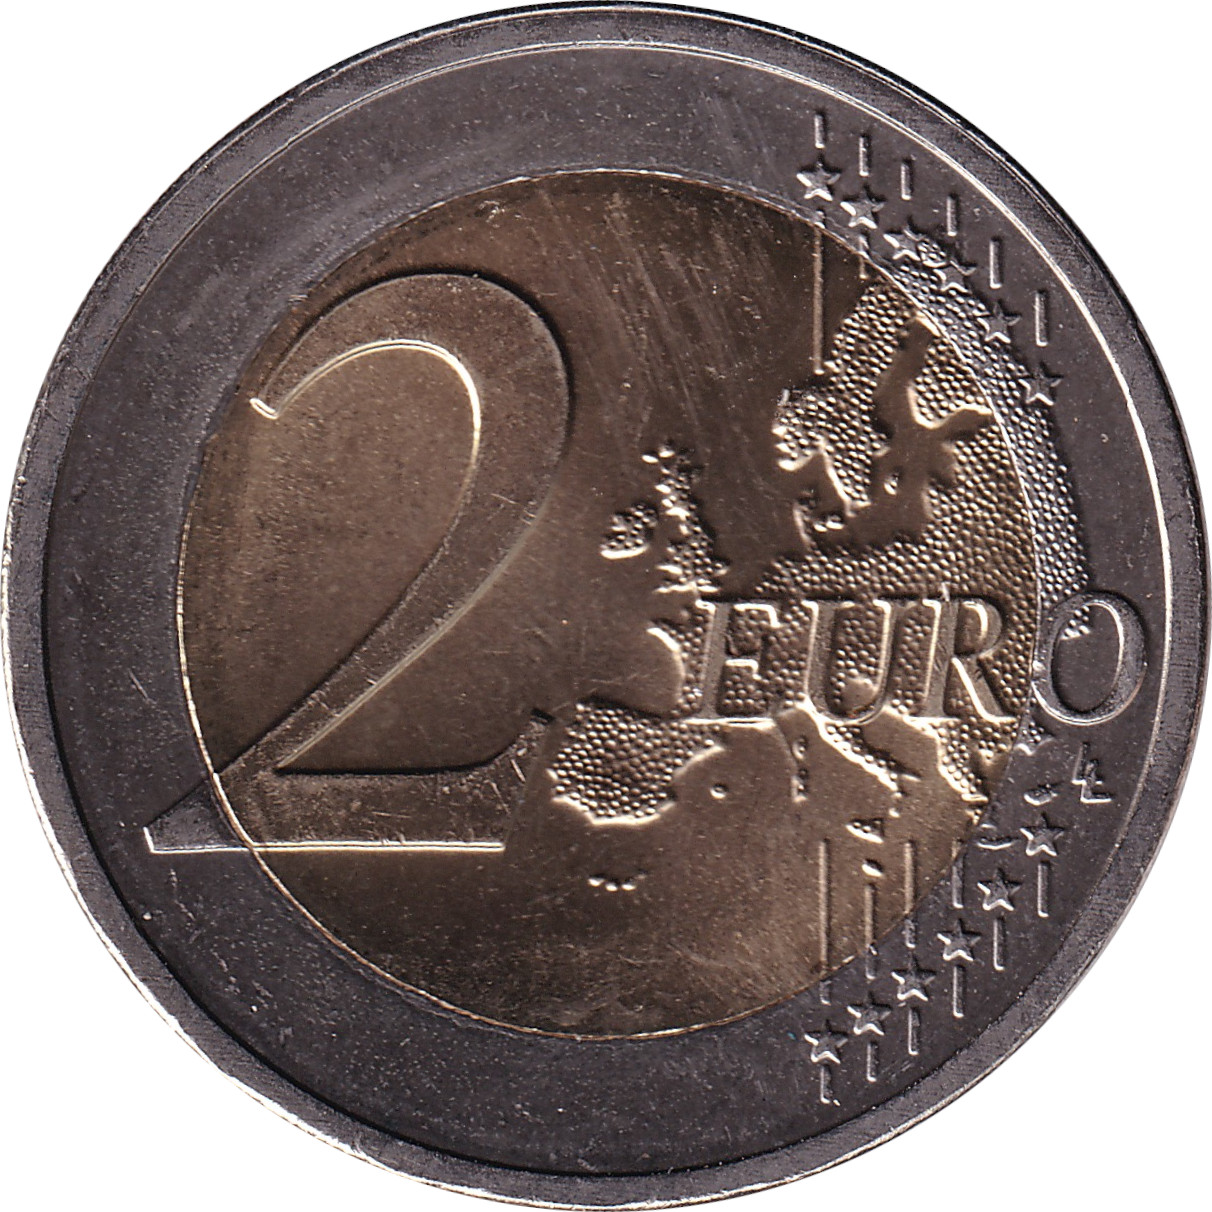 2 euro - Grand-Duc Jean